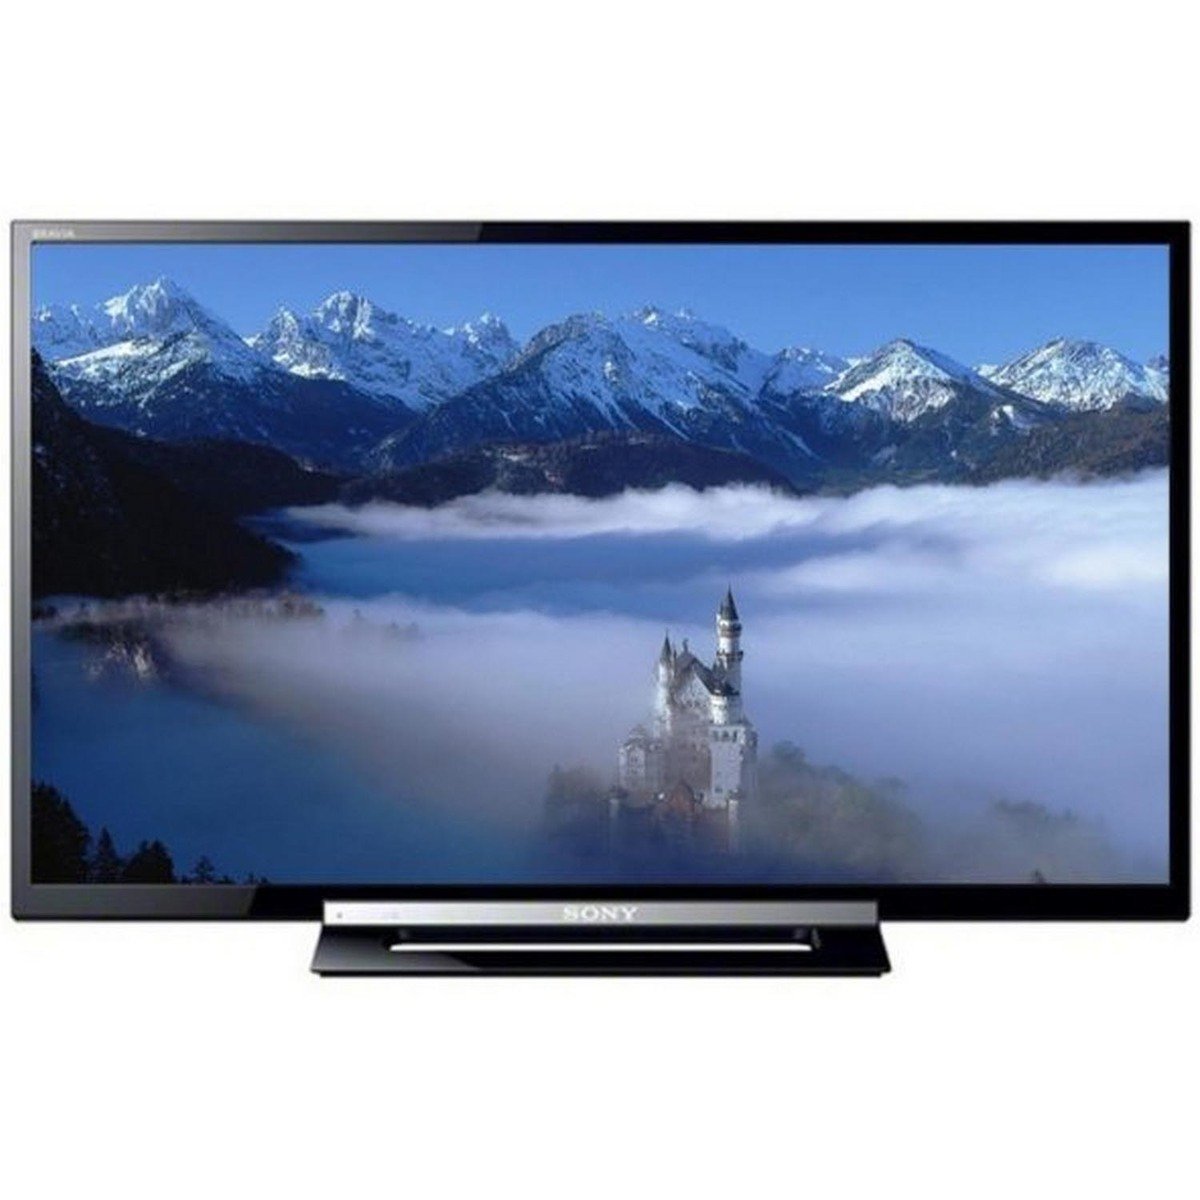 Sony HD Ready LED TV KDL-32R324E 32inch